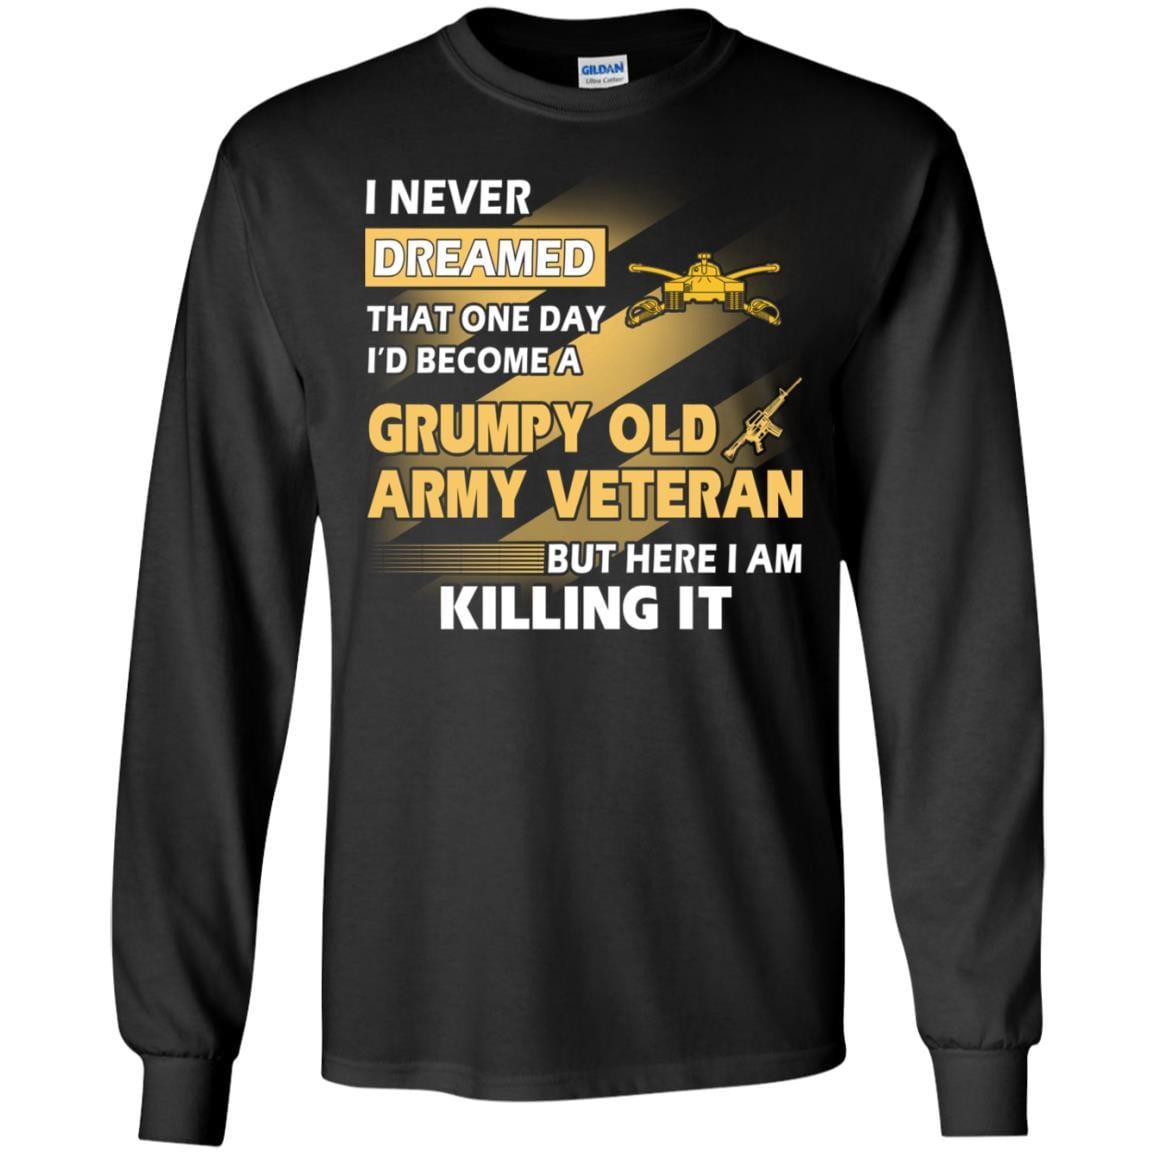 US Army T-Shirt "Armor Grumpy Old Veteran" On Front-TShirt-Army-Veterans Nation